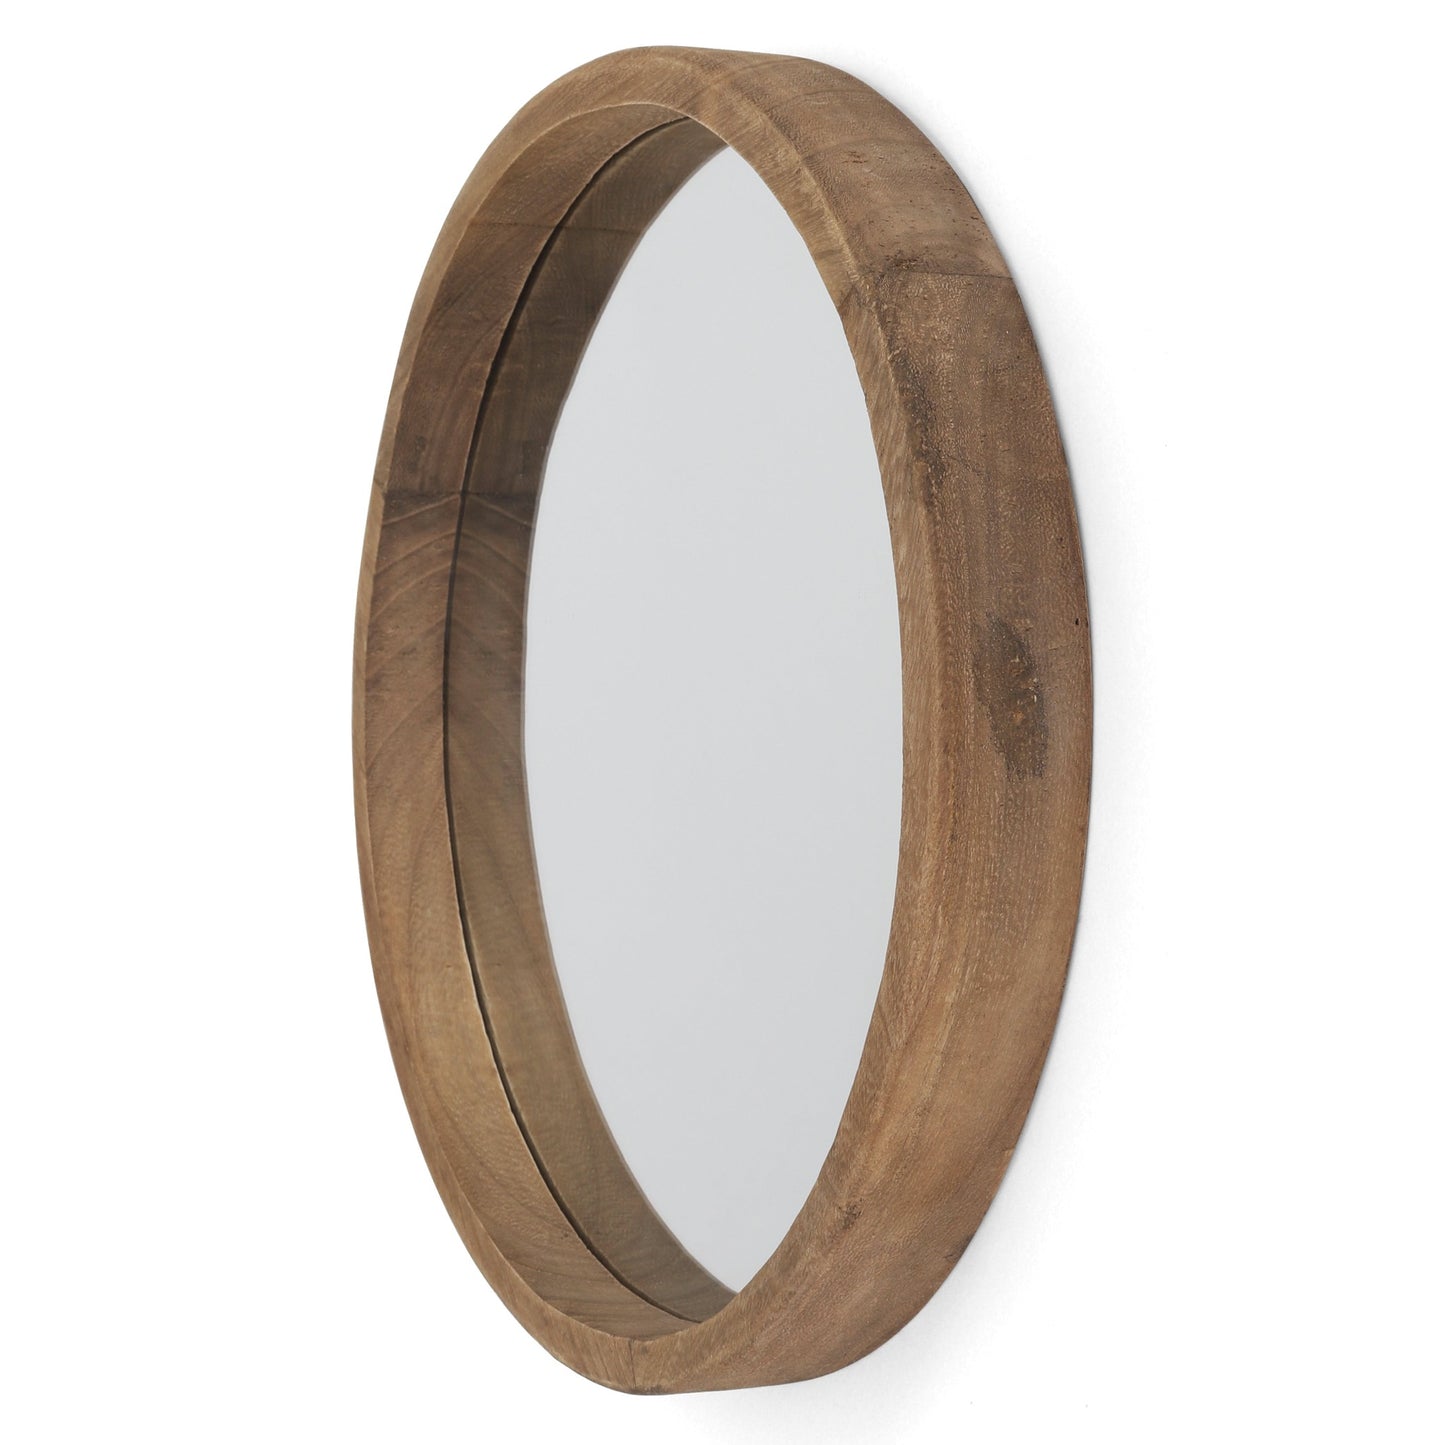 Midwood Wooden Mirror - Medium